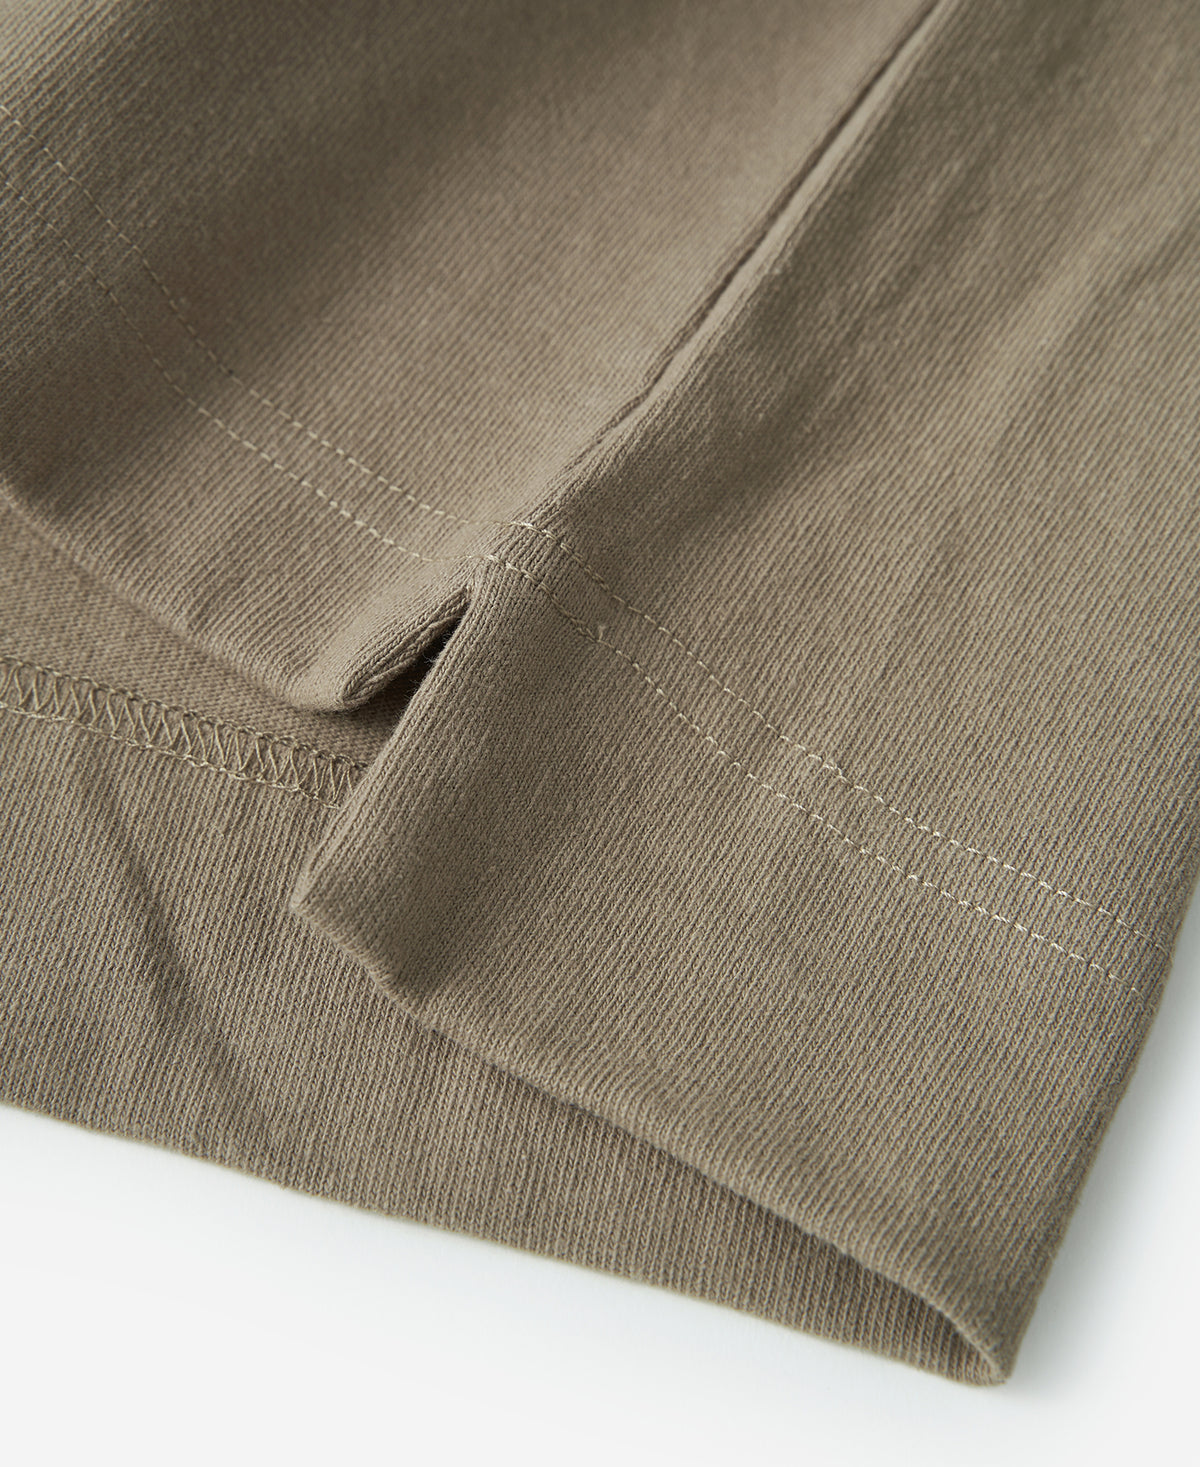 9.8 oz Cotton Classic Pocket T-Shirt - Khaki